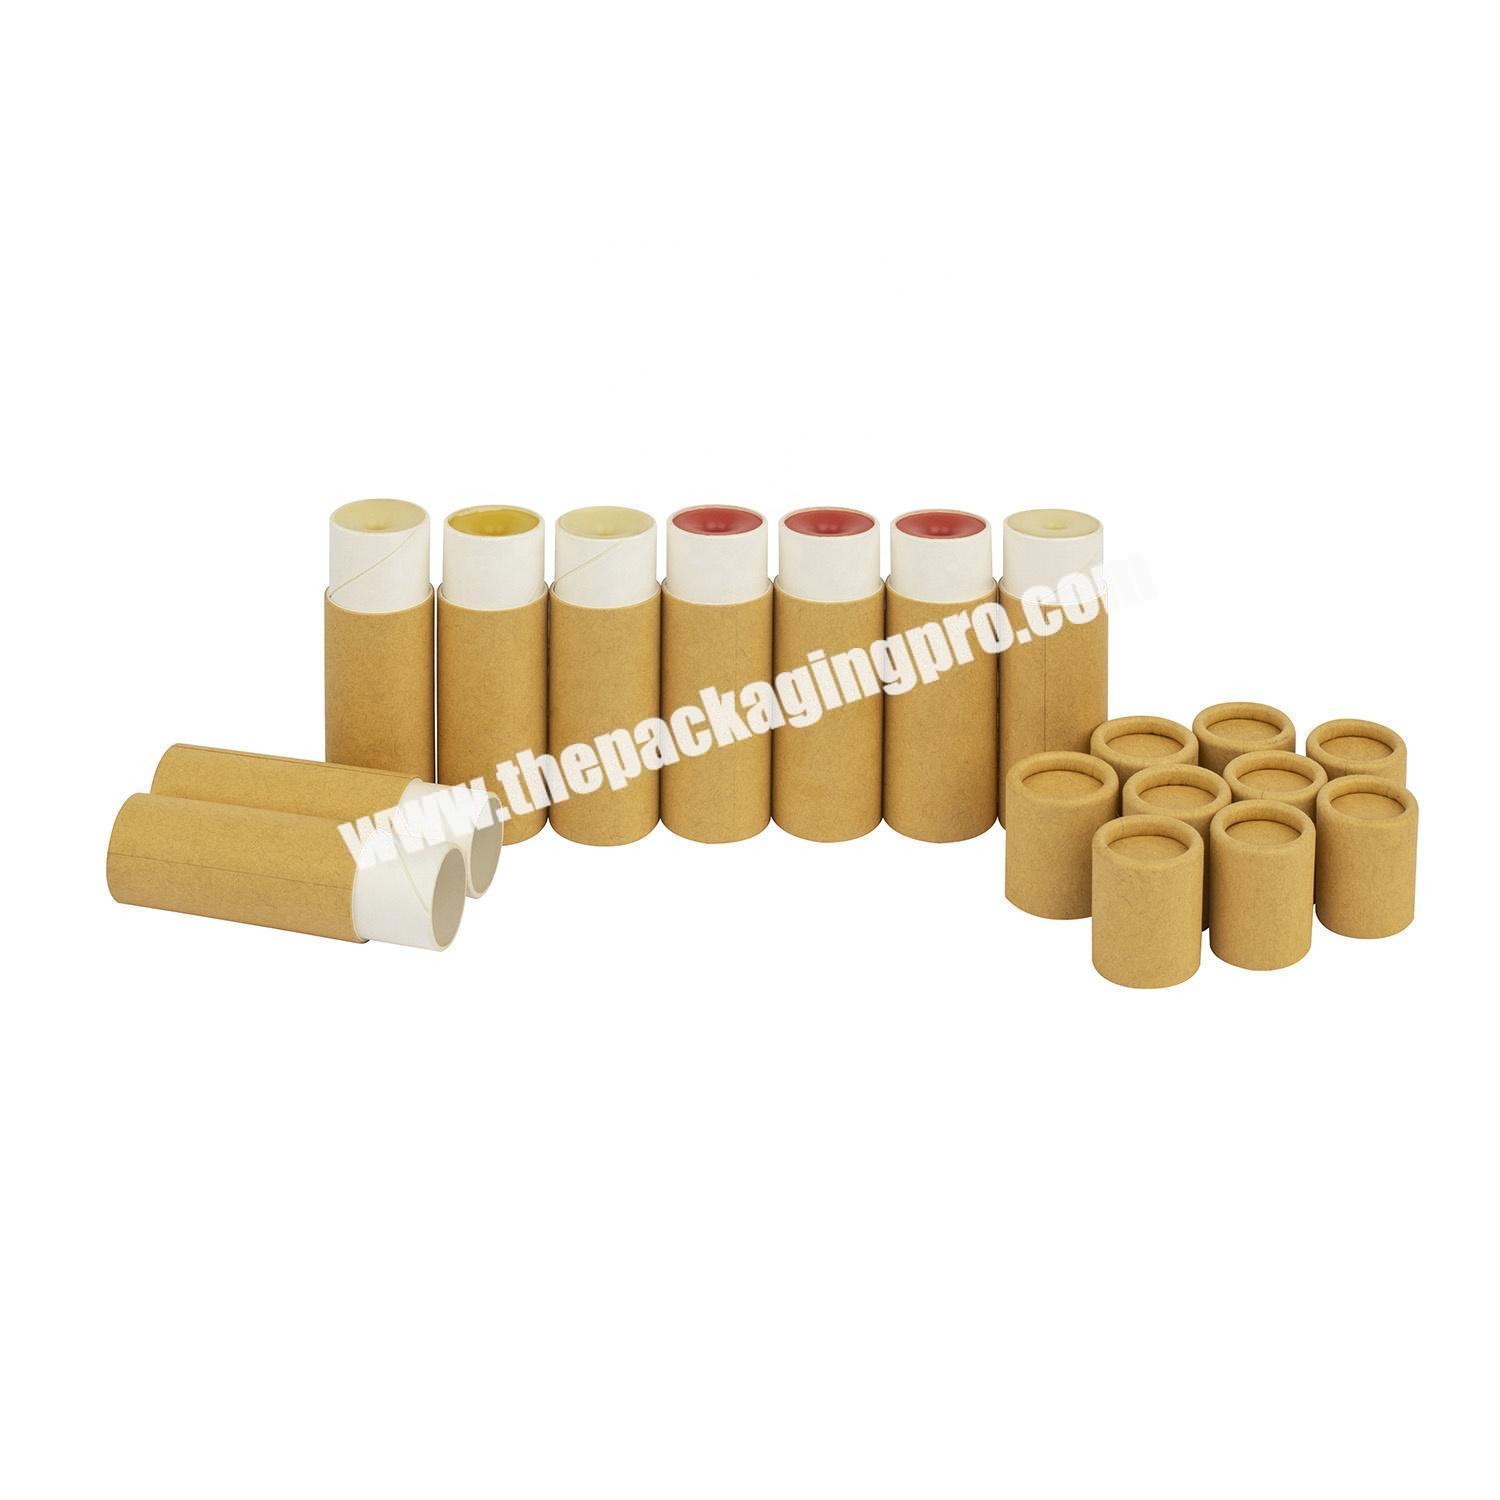 Eco 0.3 oz roll on white paper cardboard lip balm tubes